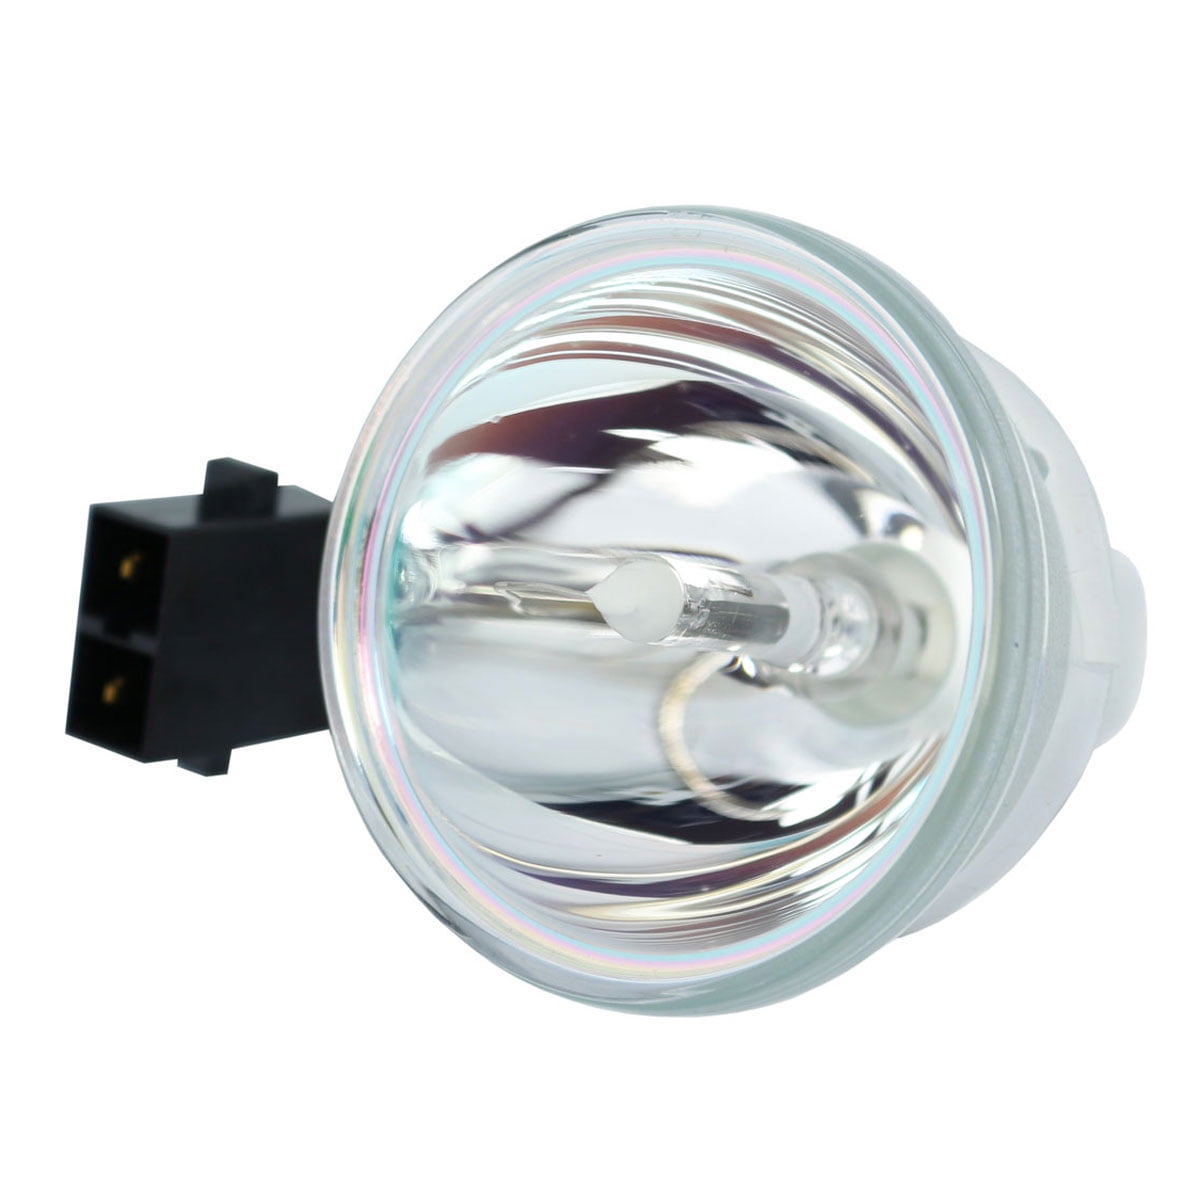 XV-Z15000 XVZ15000 AN-K15LP ANK15LP Replacement Lamp for Sharp Projectors 